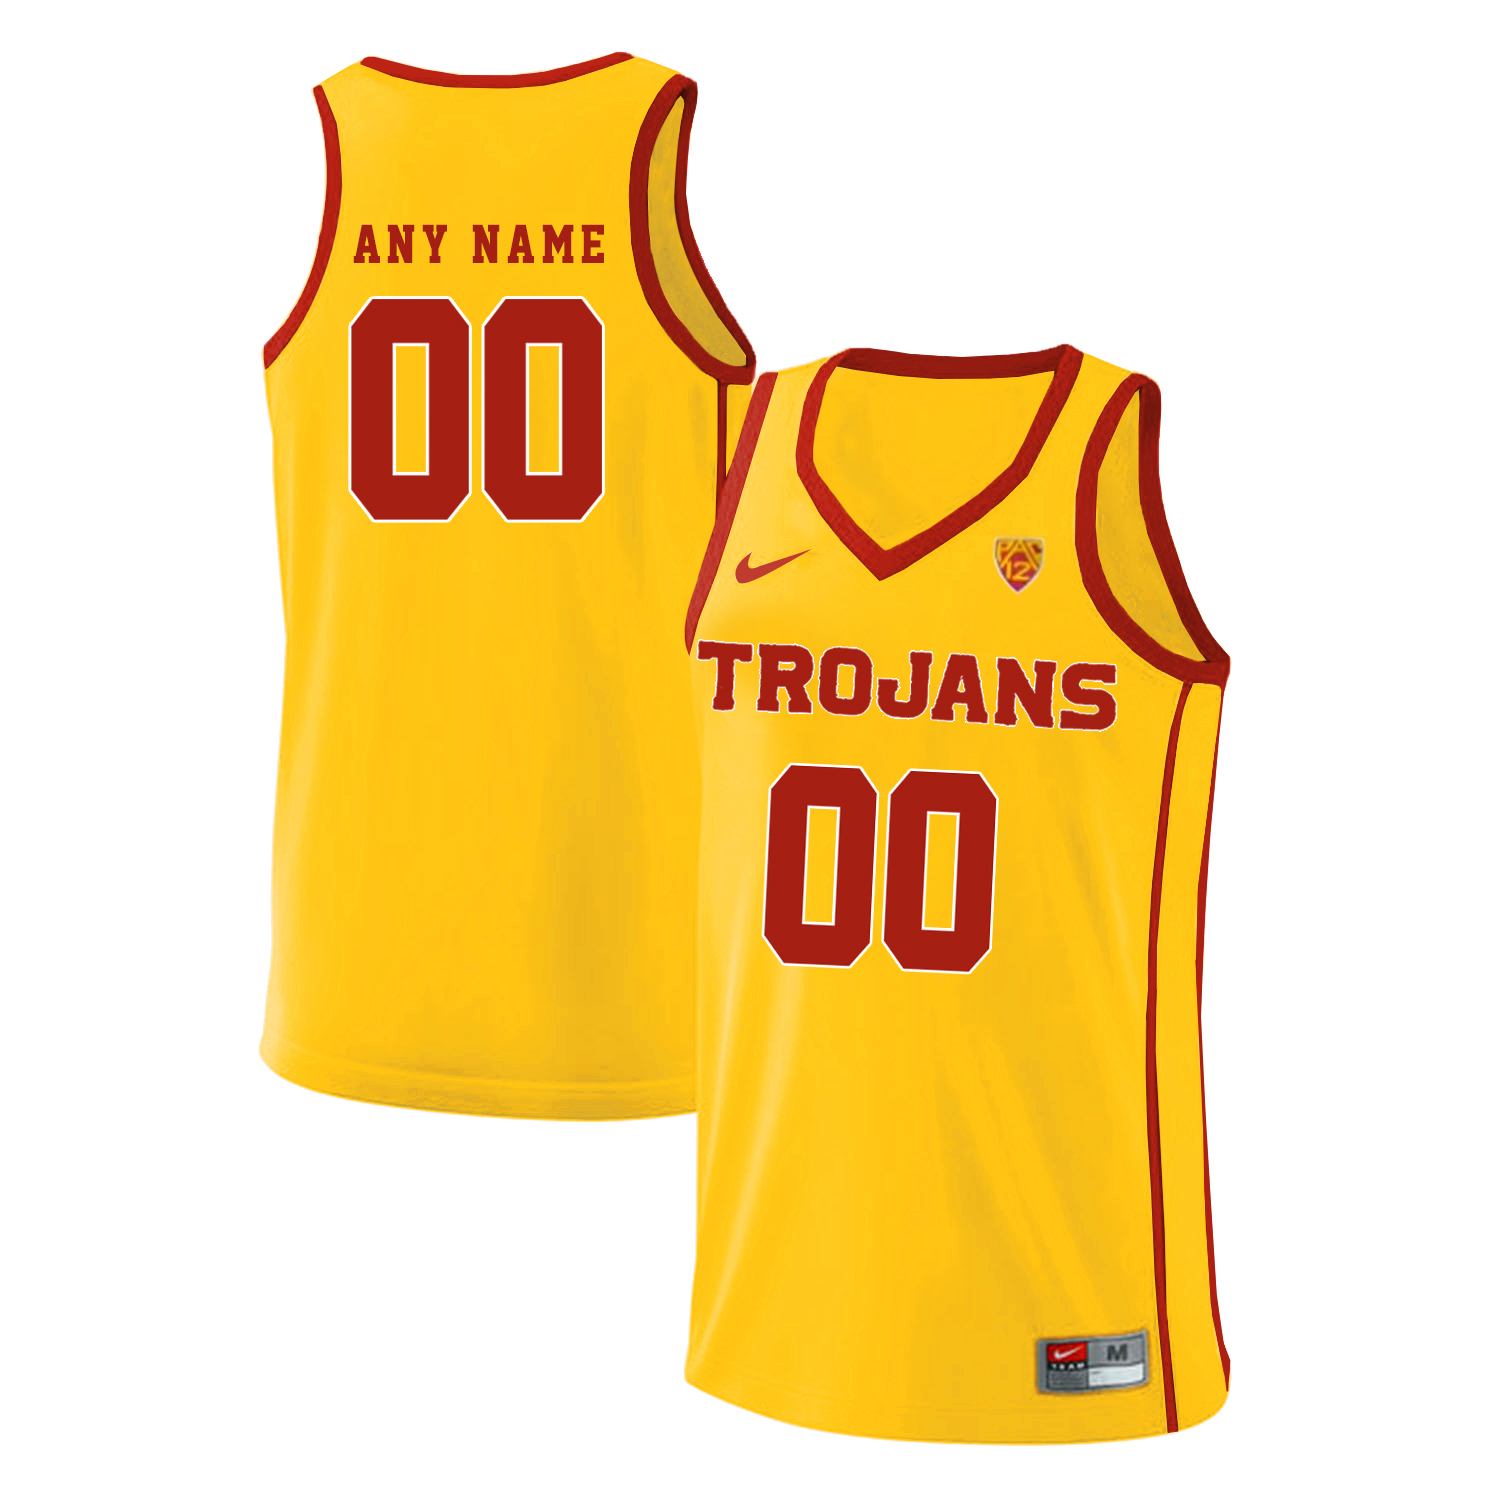 USC Trojans Yellow Men's Performance Customized Basketball Jersey - Click Image to Close